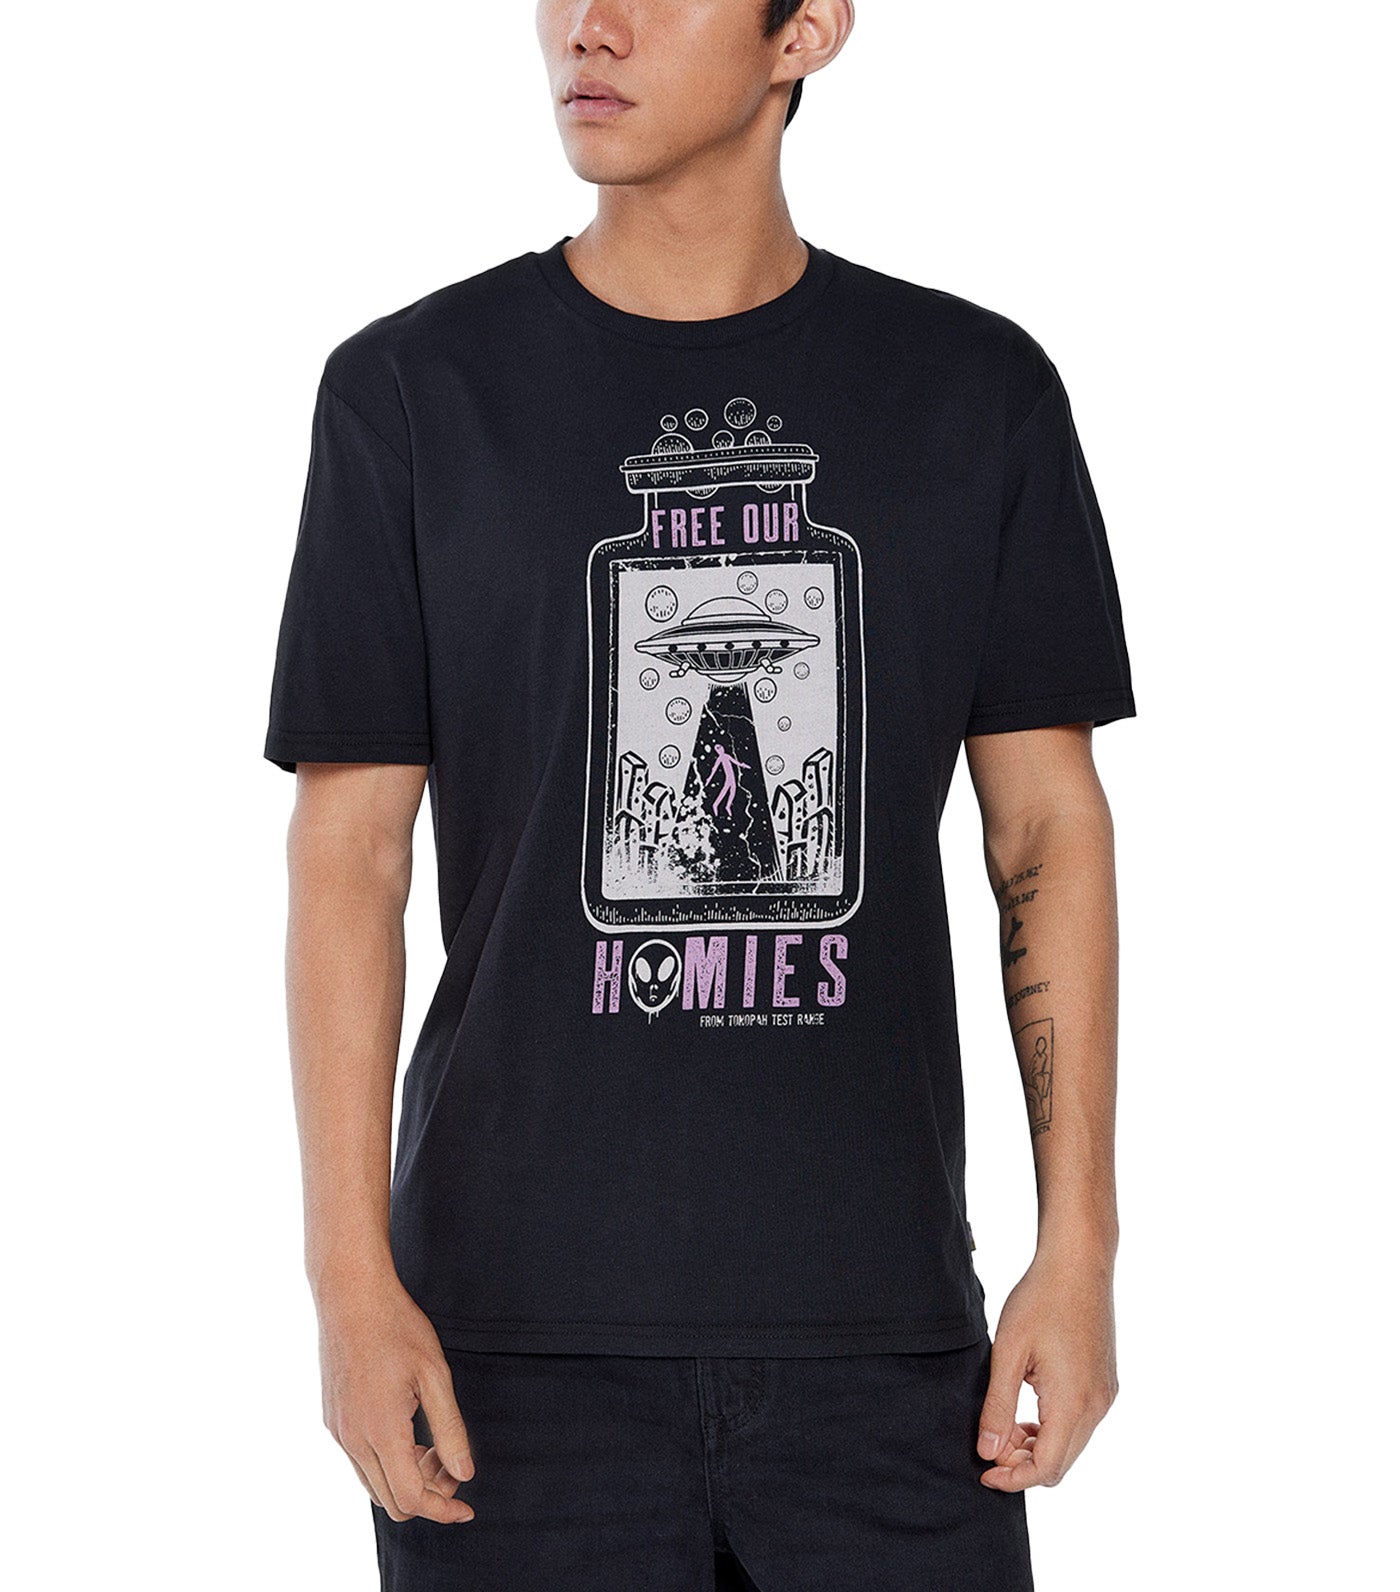 Homies T-Shirt Black